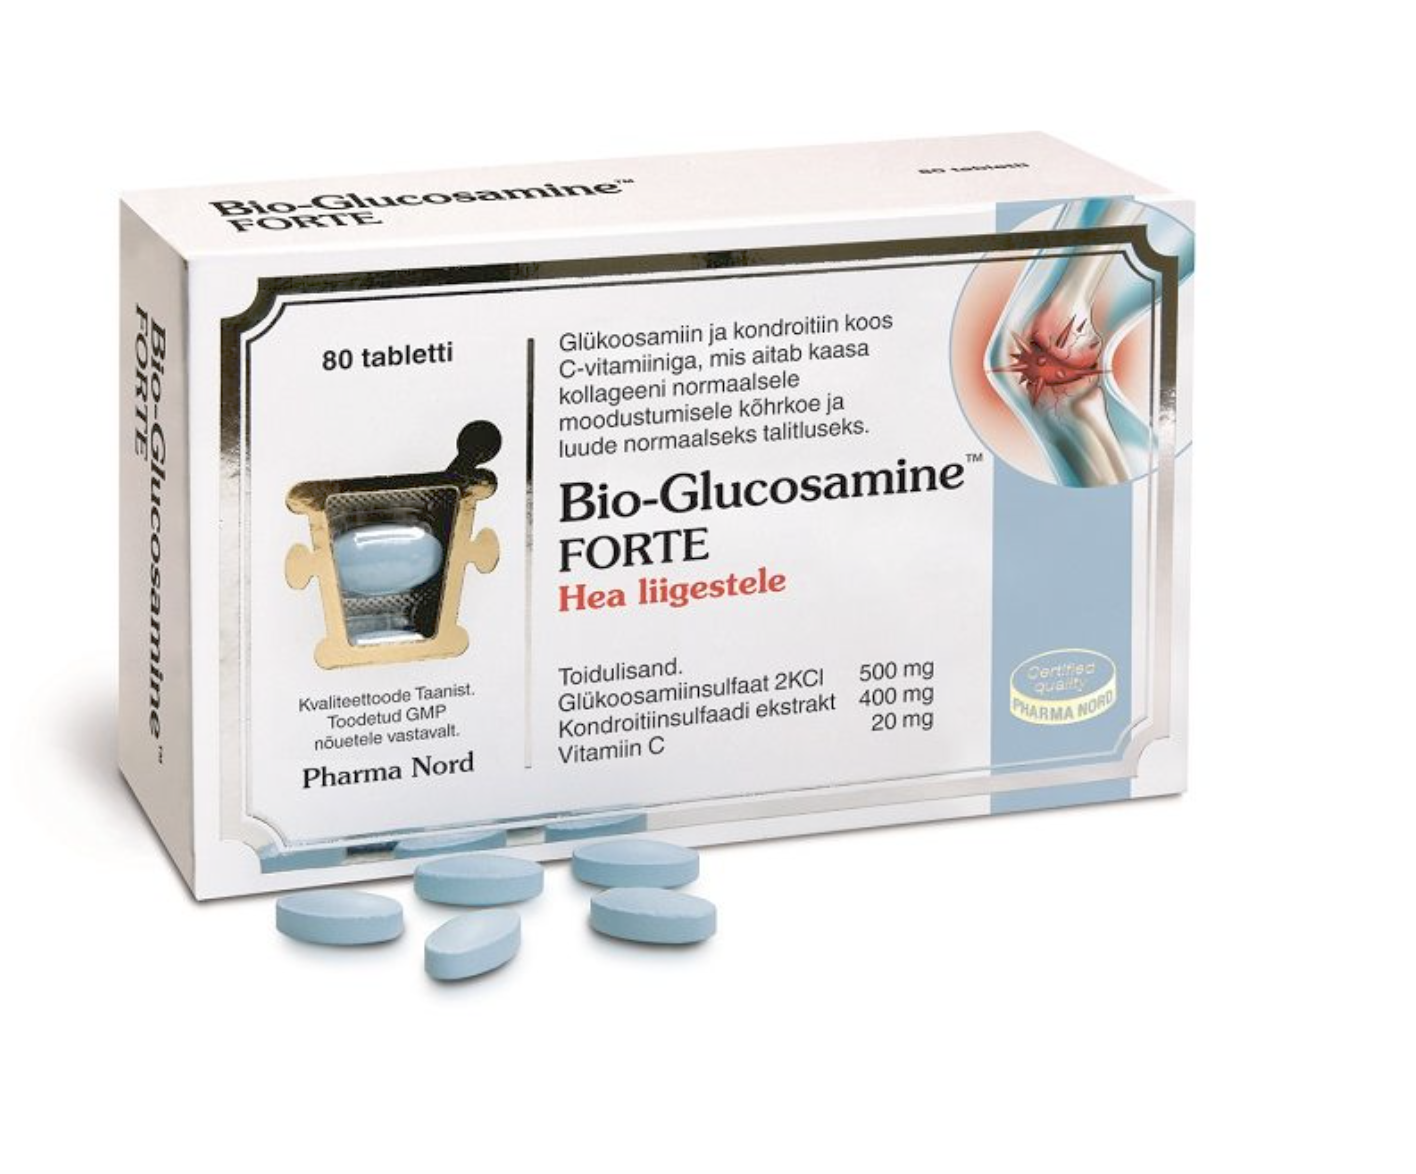 Glukoosamiini kondroitiin-vitamiin Artroosi 0-1 ola liigese aste